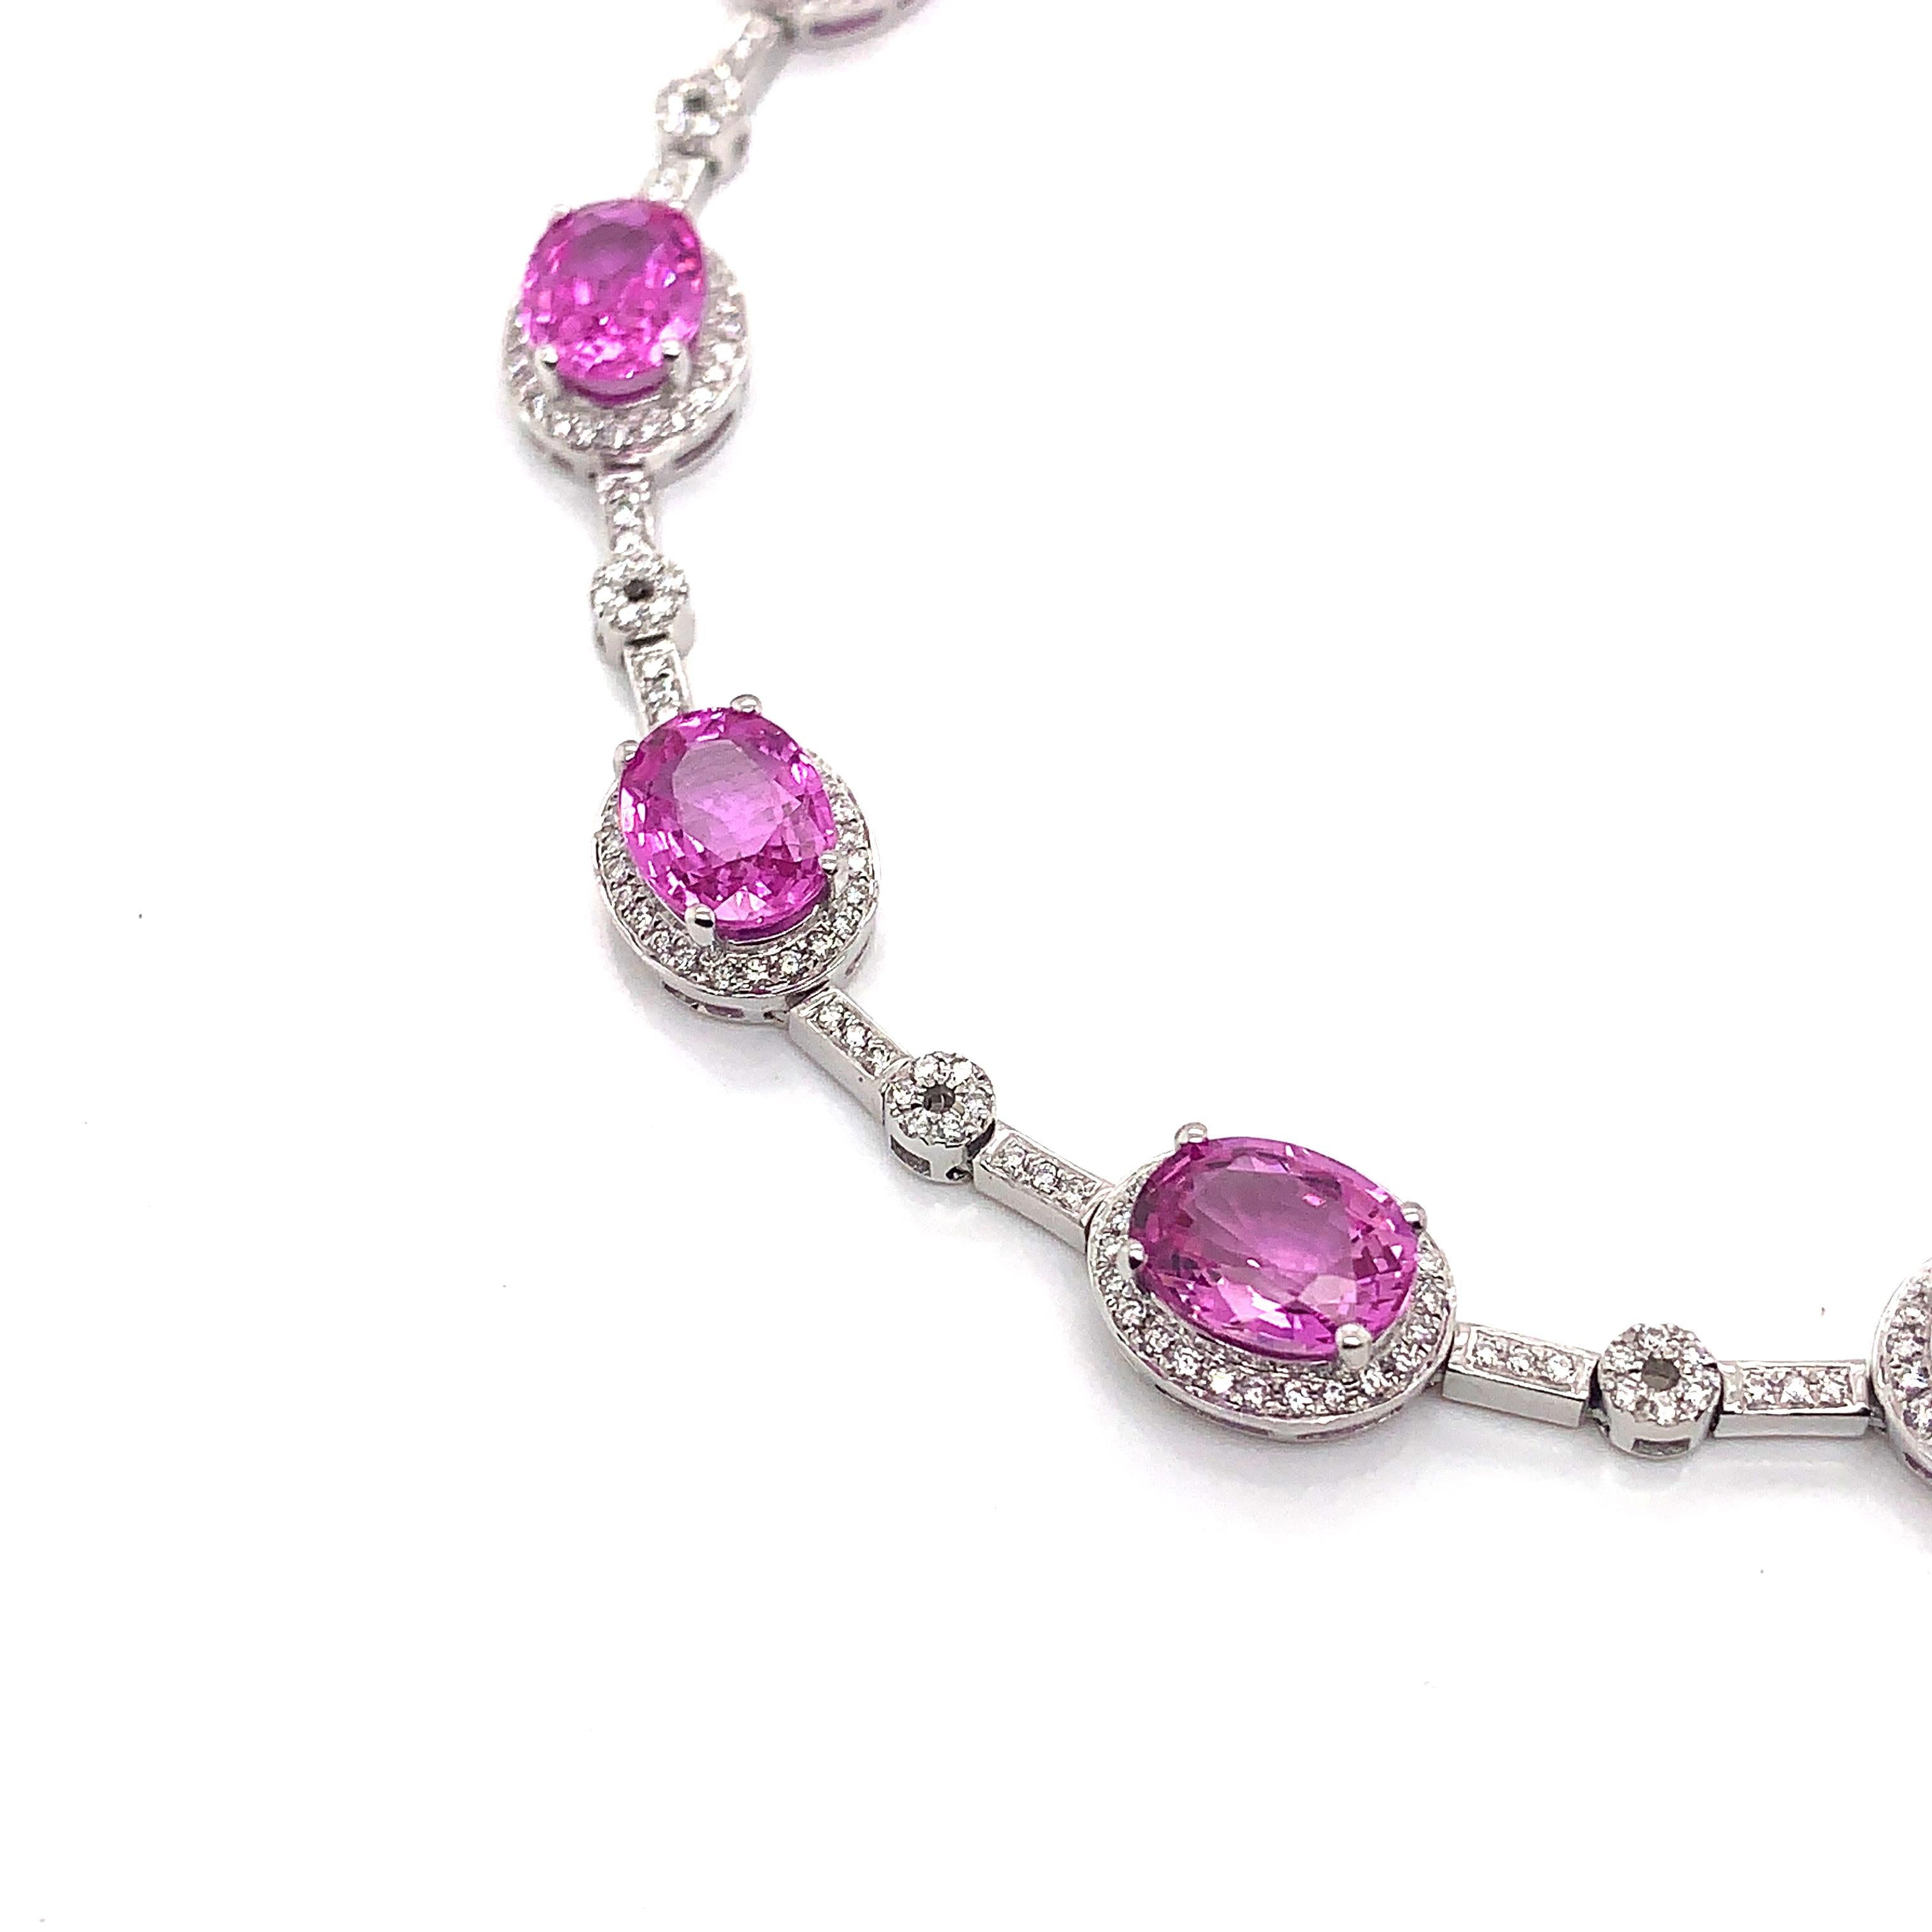 Modern 21.0 Carat Pink Sapphire Necklace in 18 Karat White Gold with Diamonds